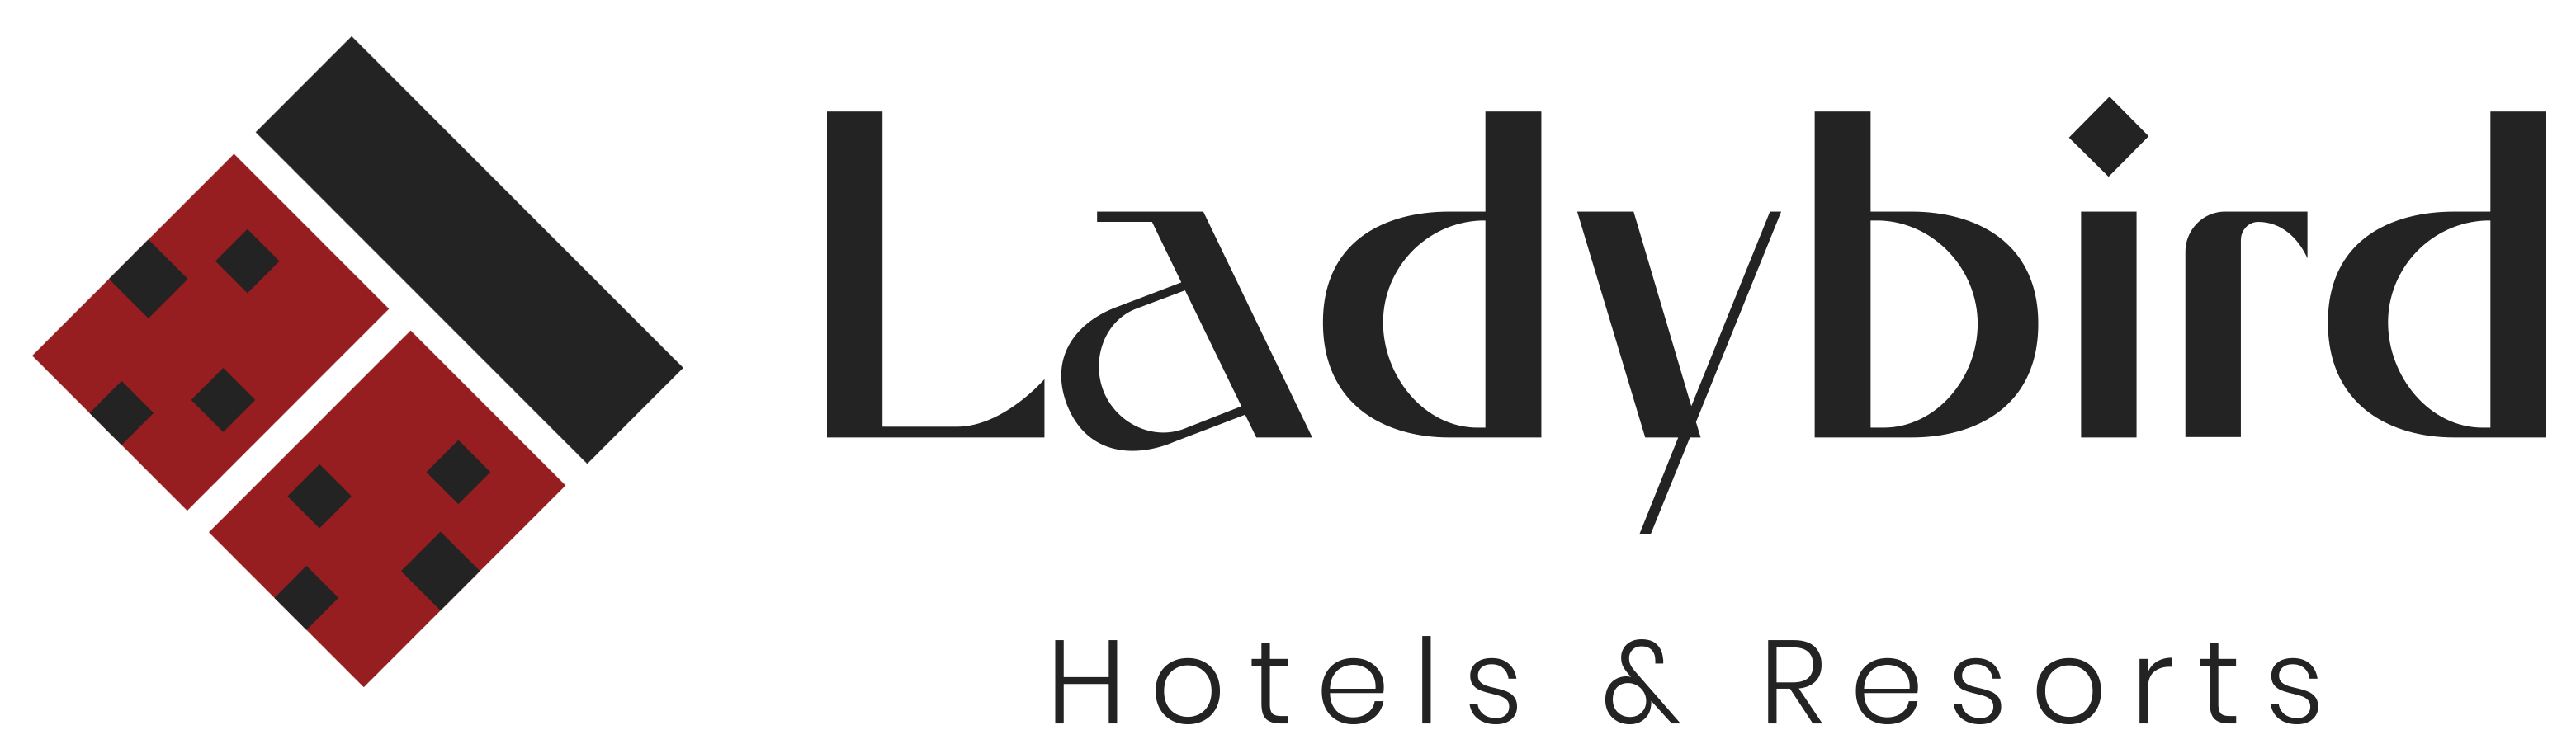 Ladybird Hotels & Resorts